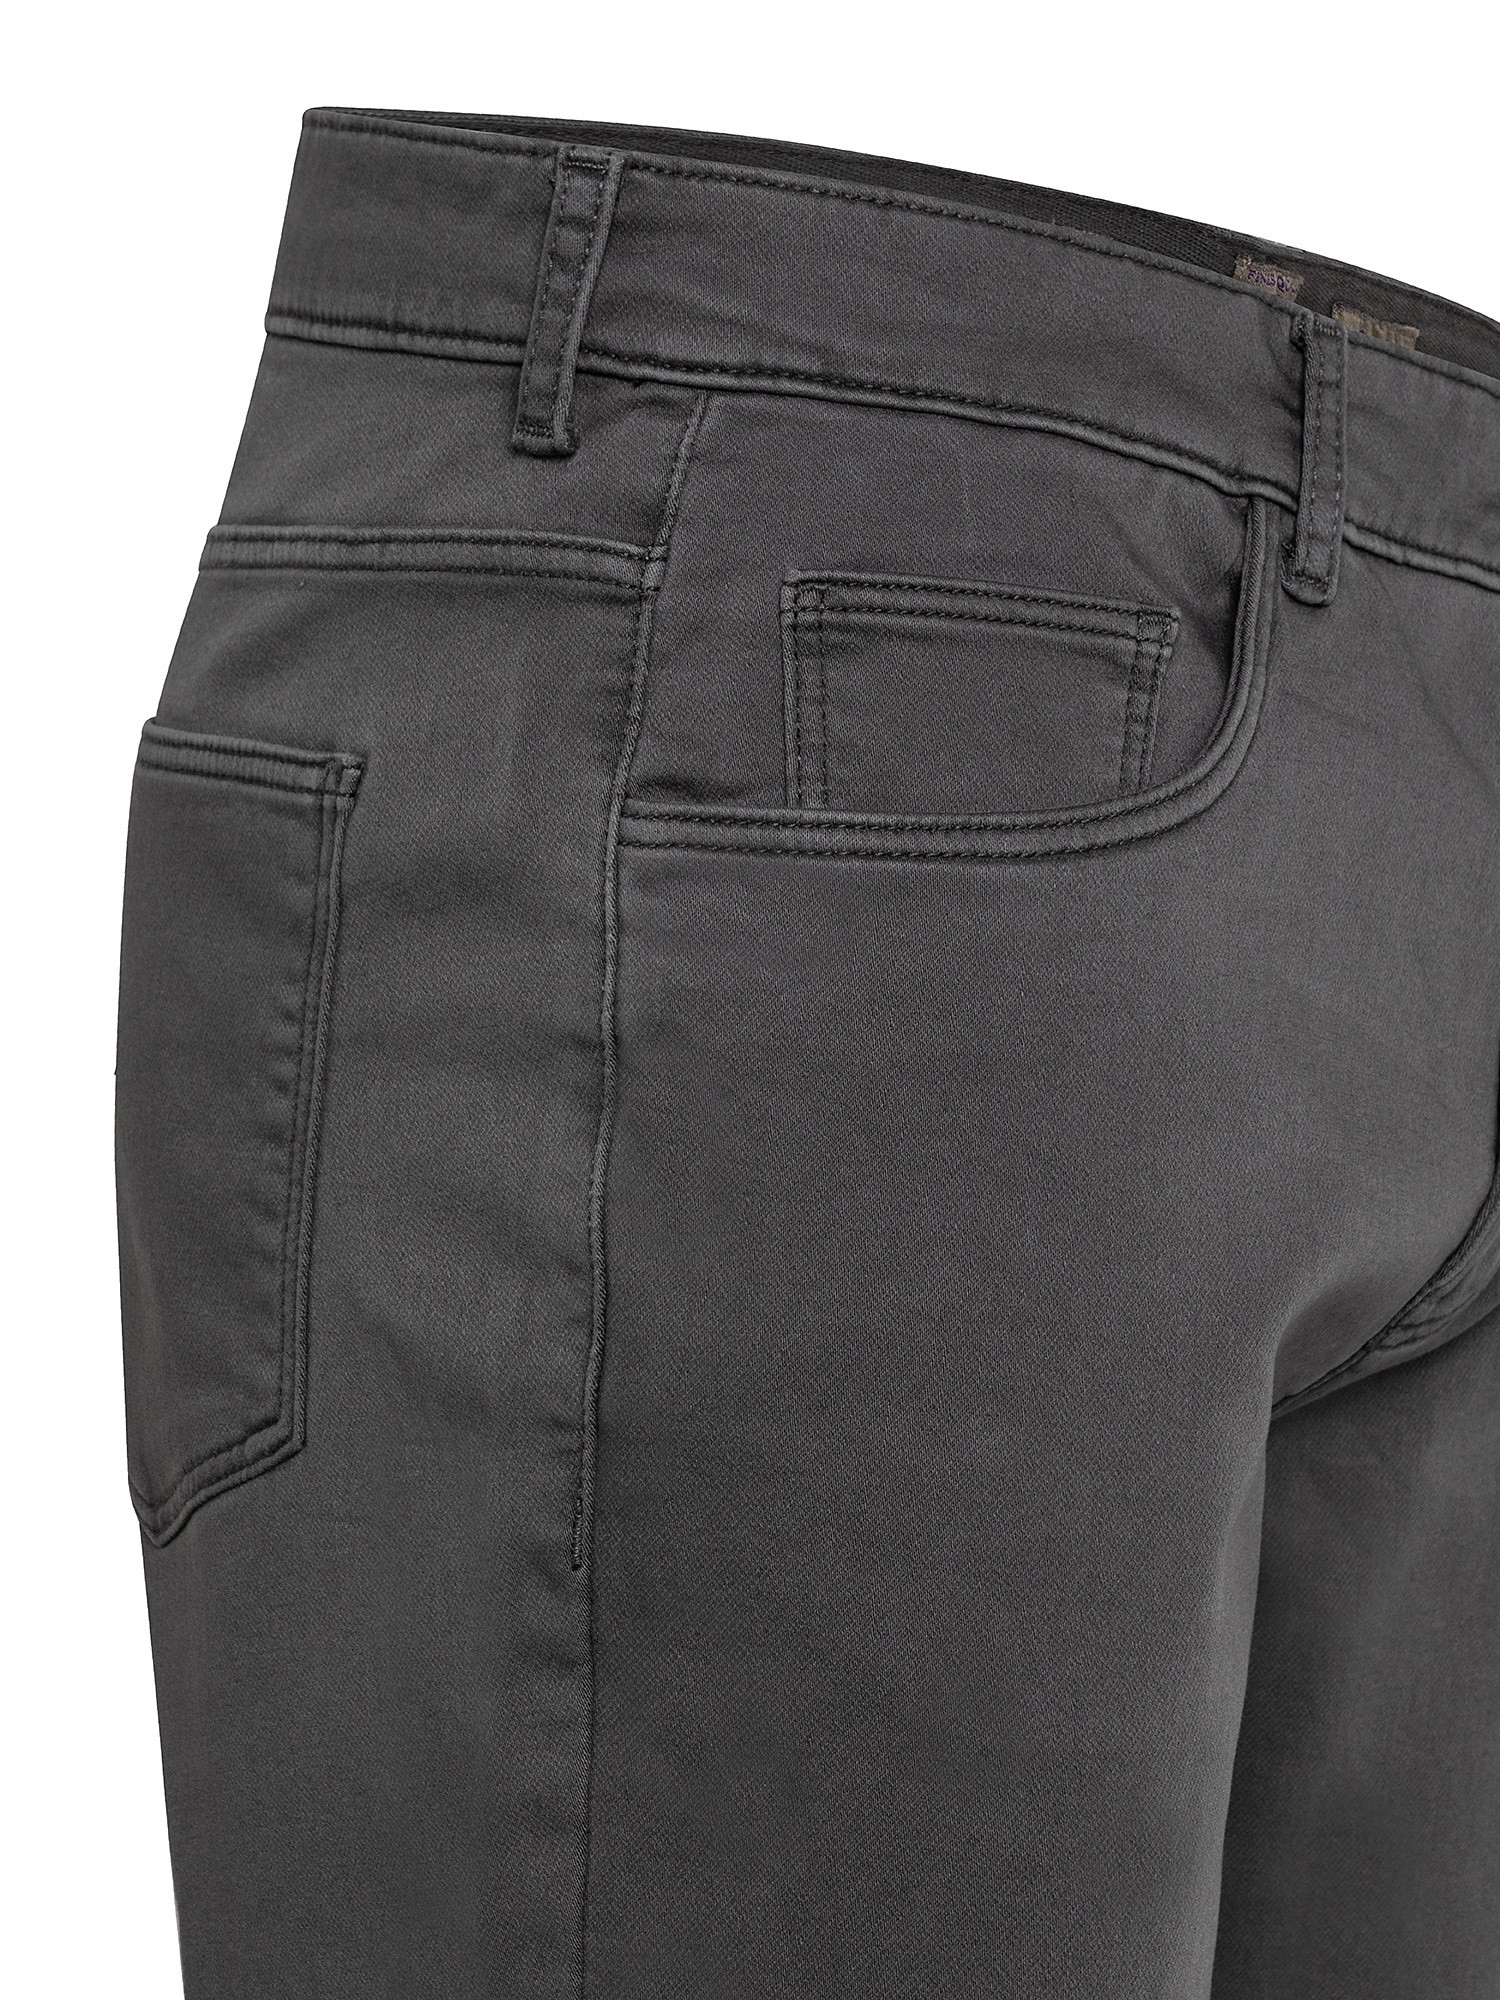 Pantalone 5 tasche slim in felpa, Grigio, large image number 2